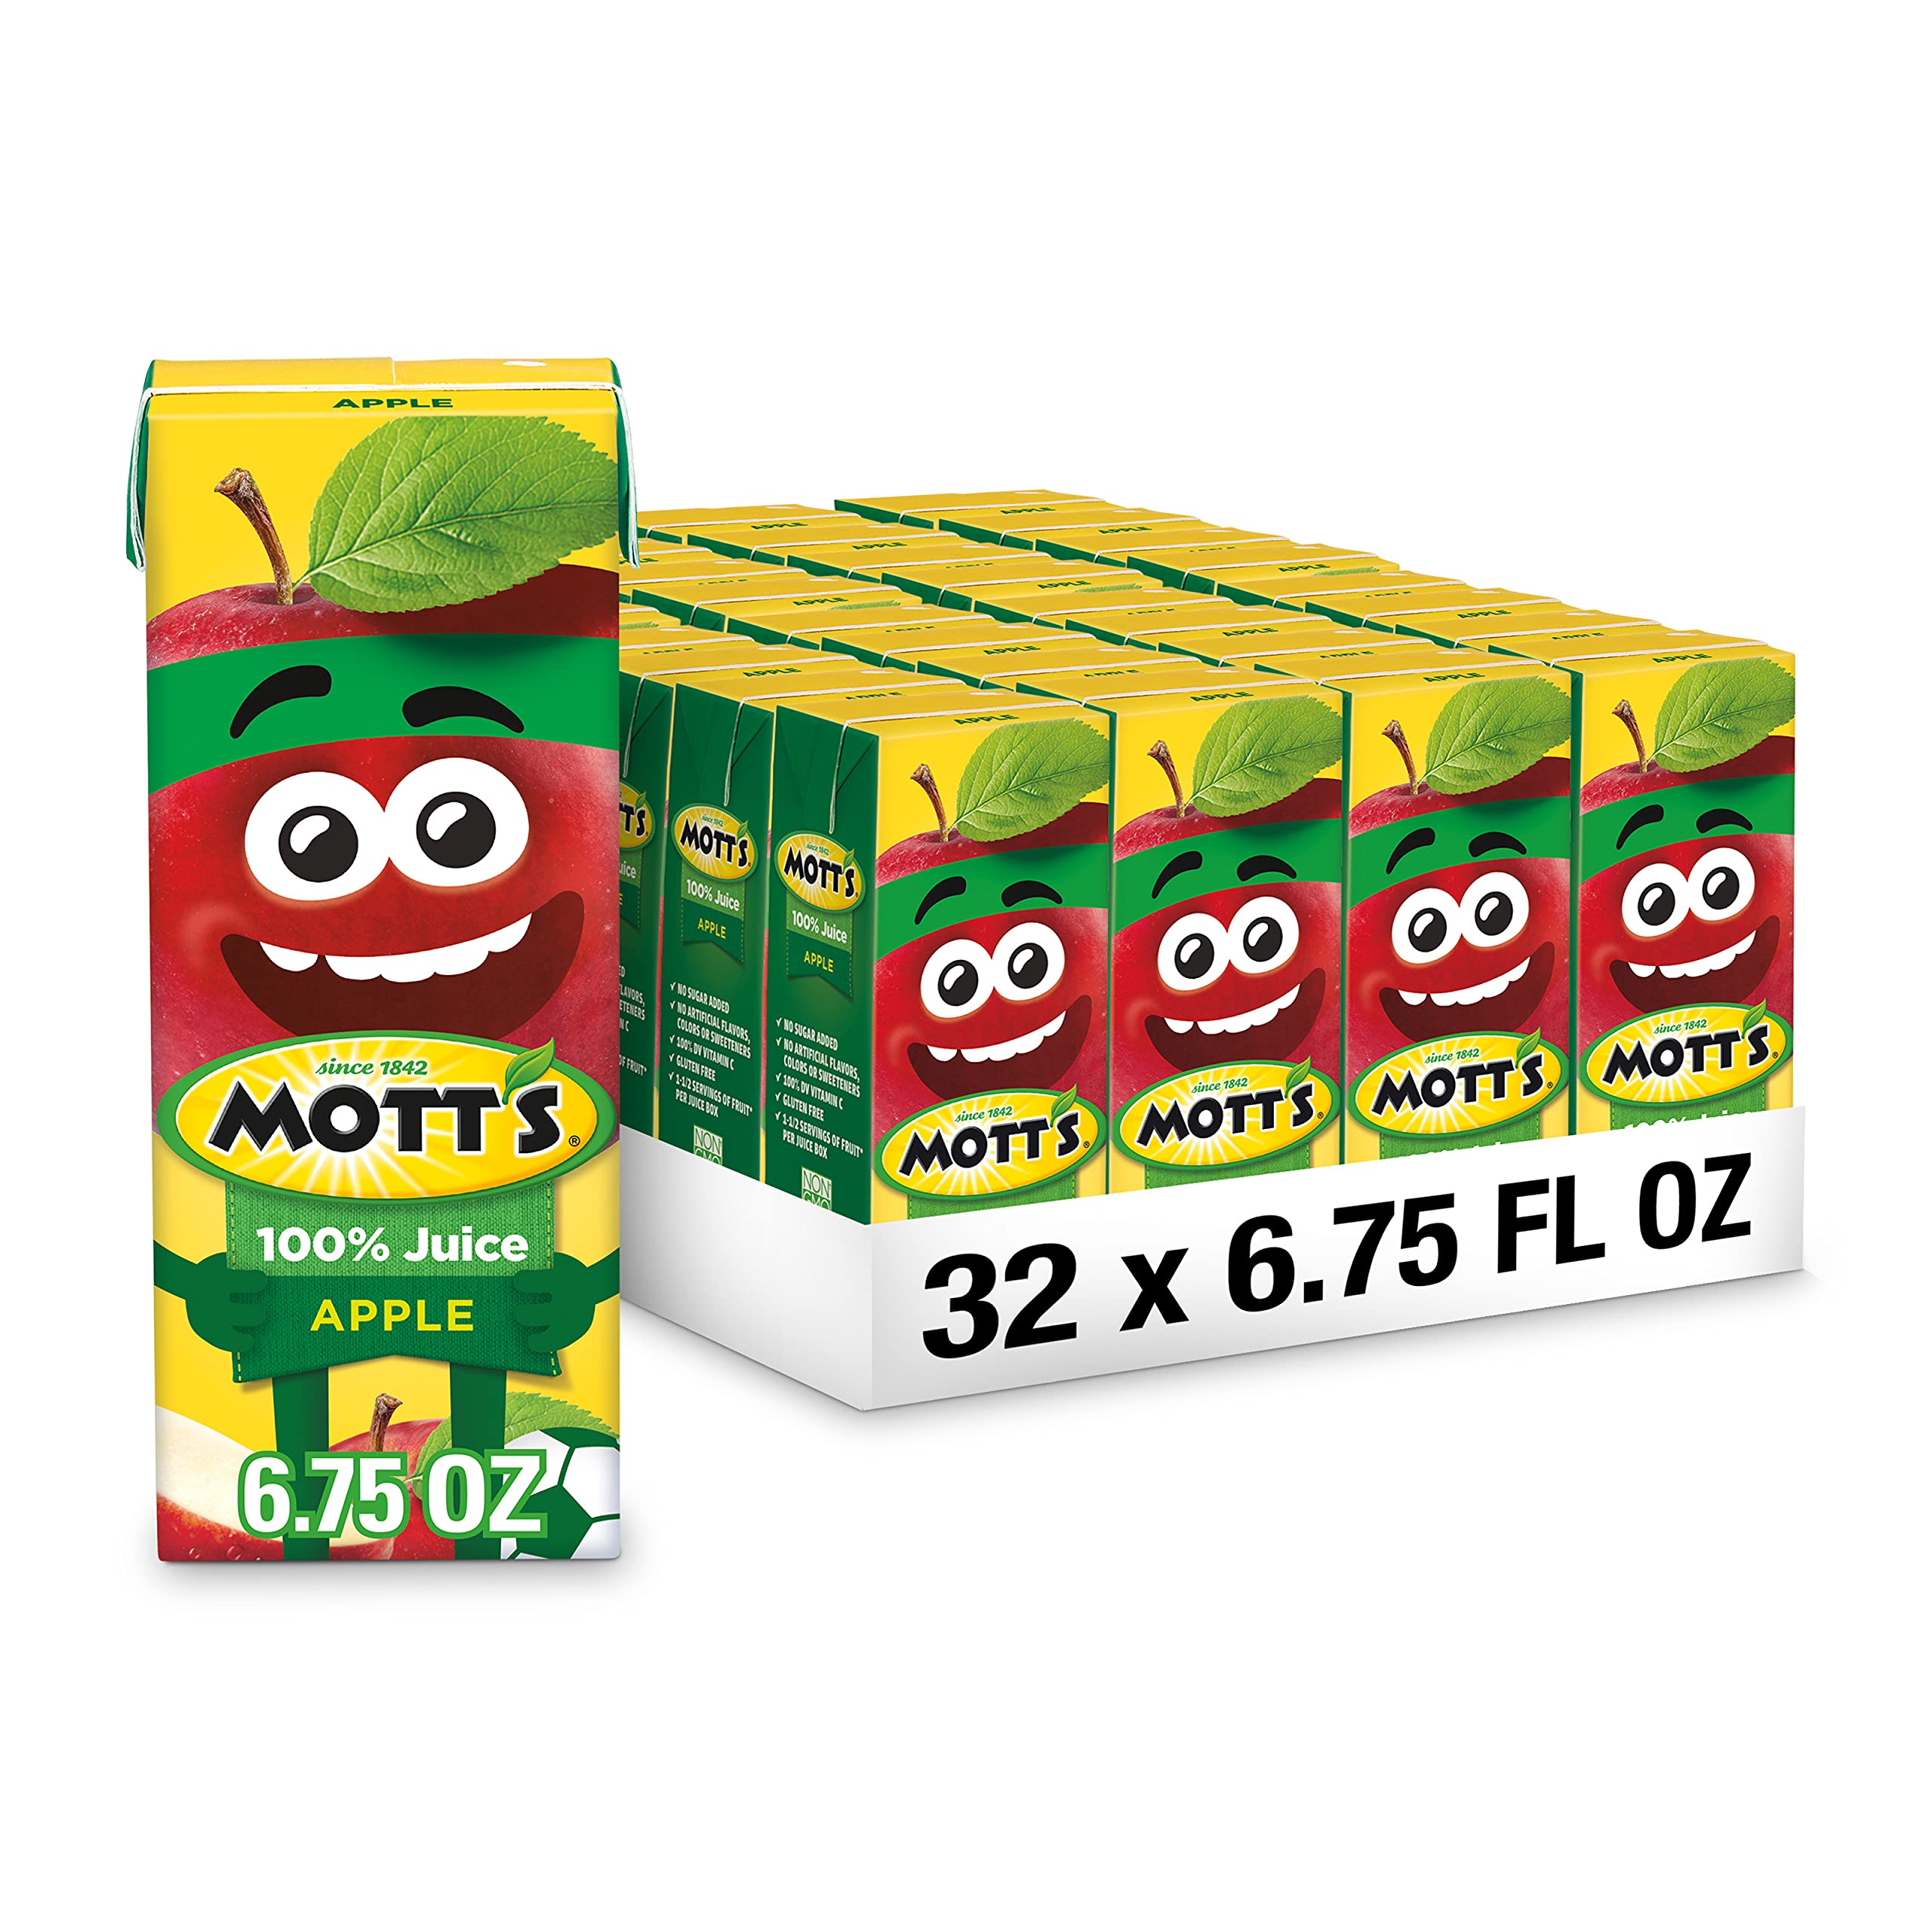 Mott's 100 Percent Original Apple Juice, 6.75 fl oz boxes, 32 Count (4 Packs of 8) [Subscribe & Save] $8.53